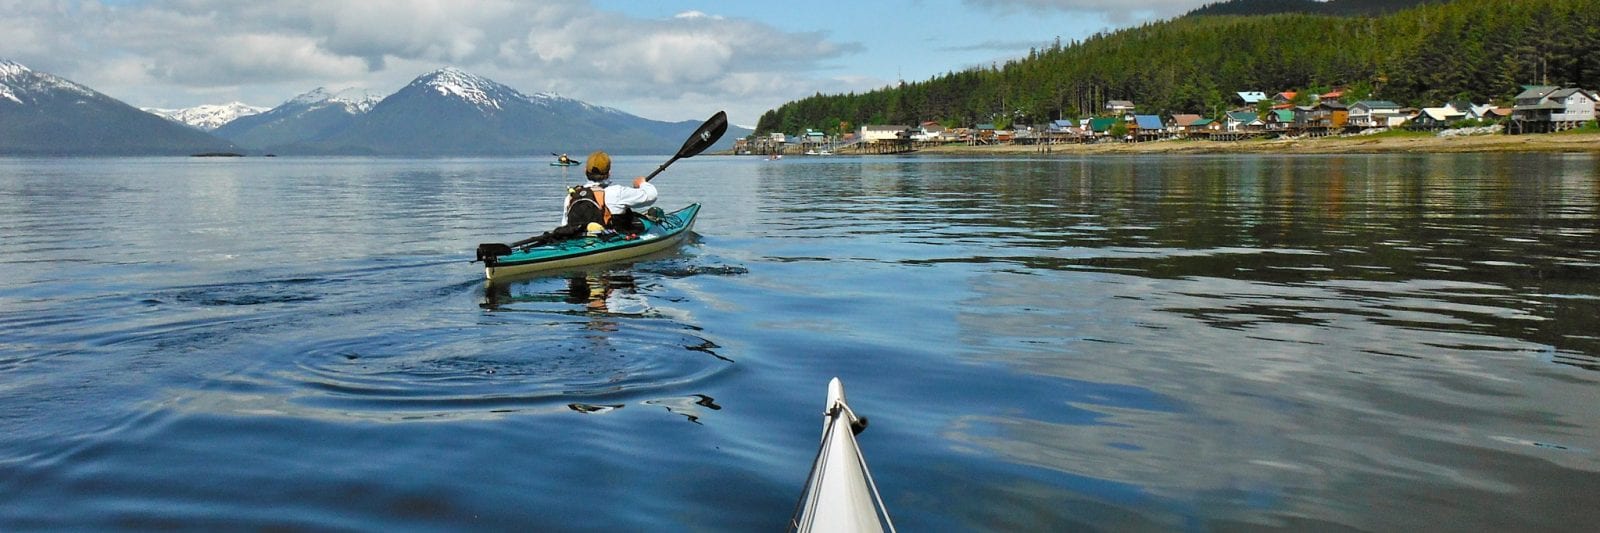 Image of kayakers on the water at Tenakee Springs, Alaska